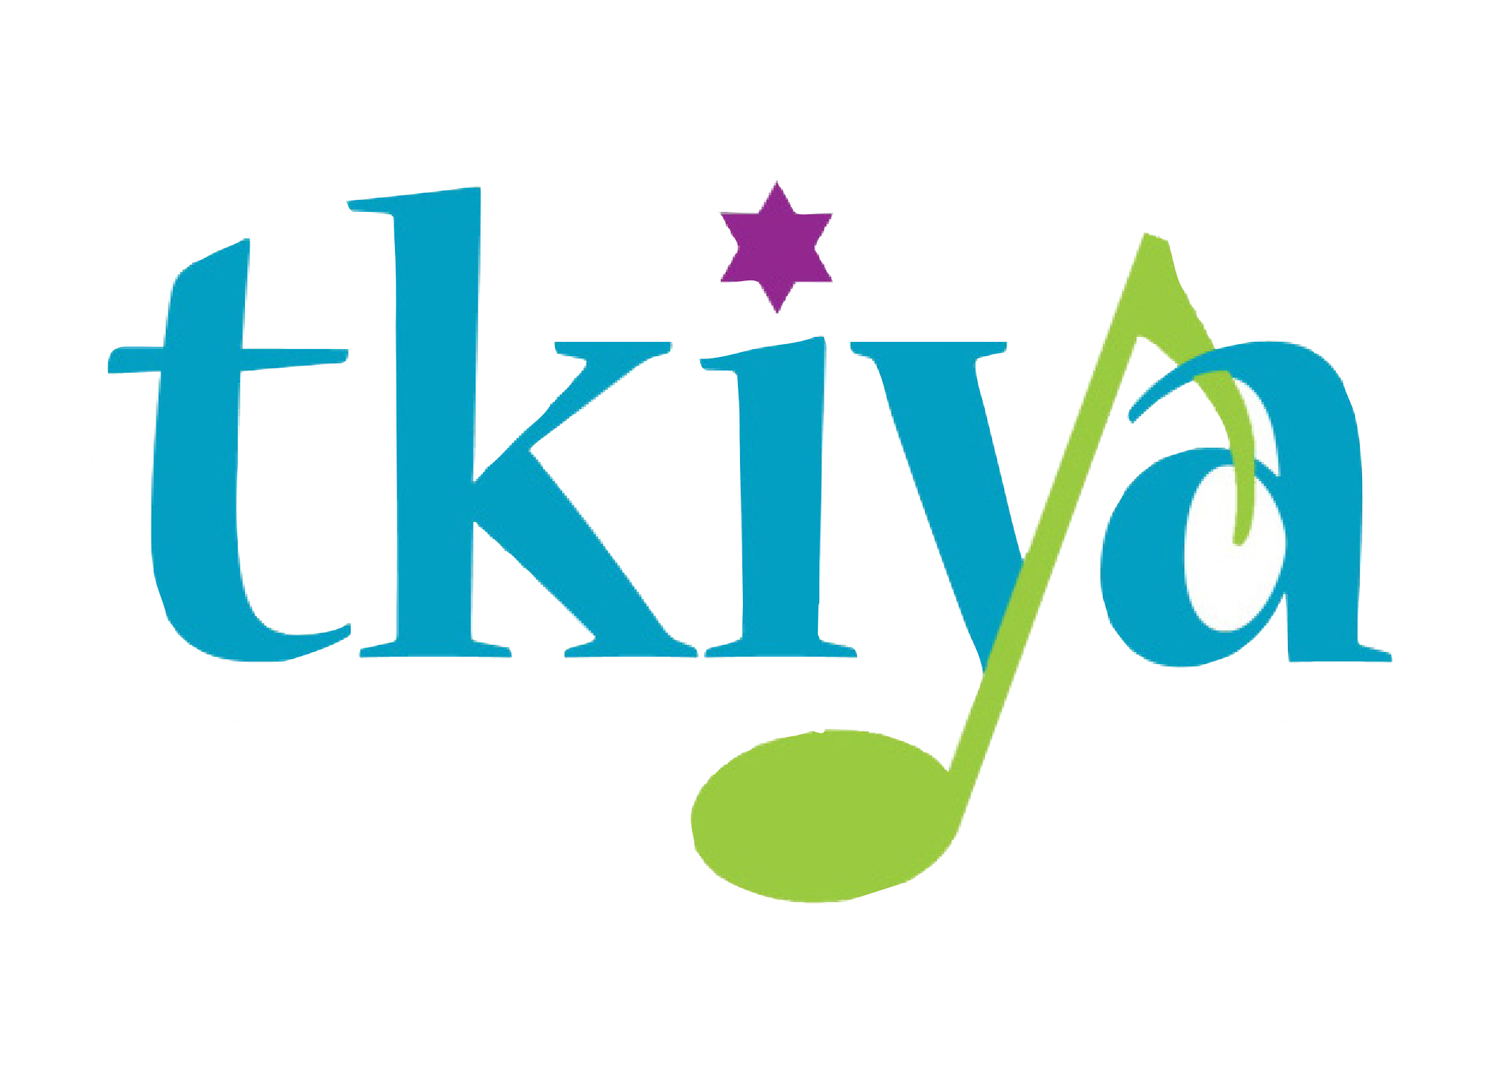 Tkiya Music